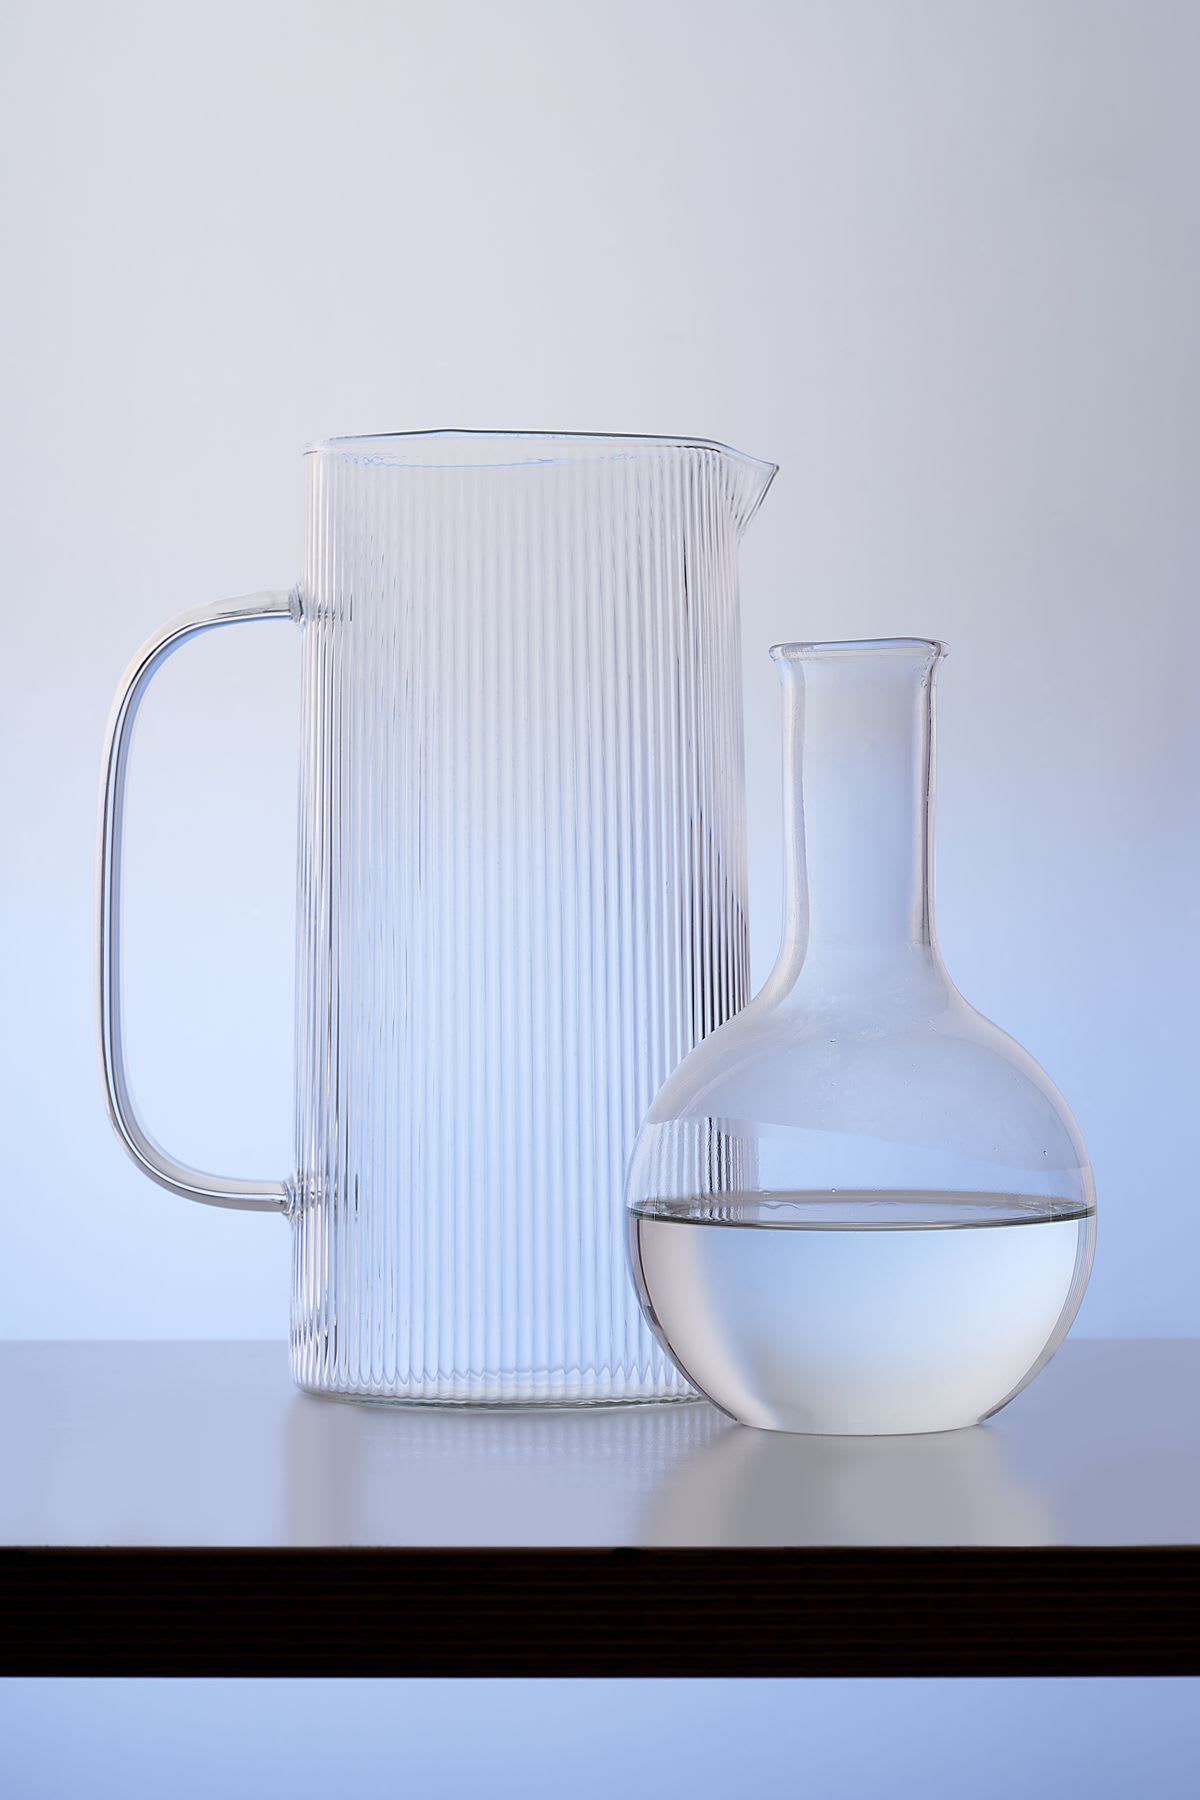 A glass jug is beside a beaker with water in it.